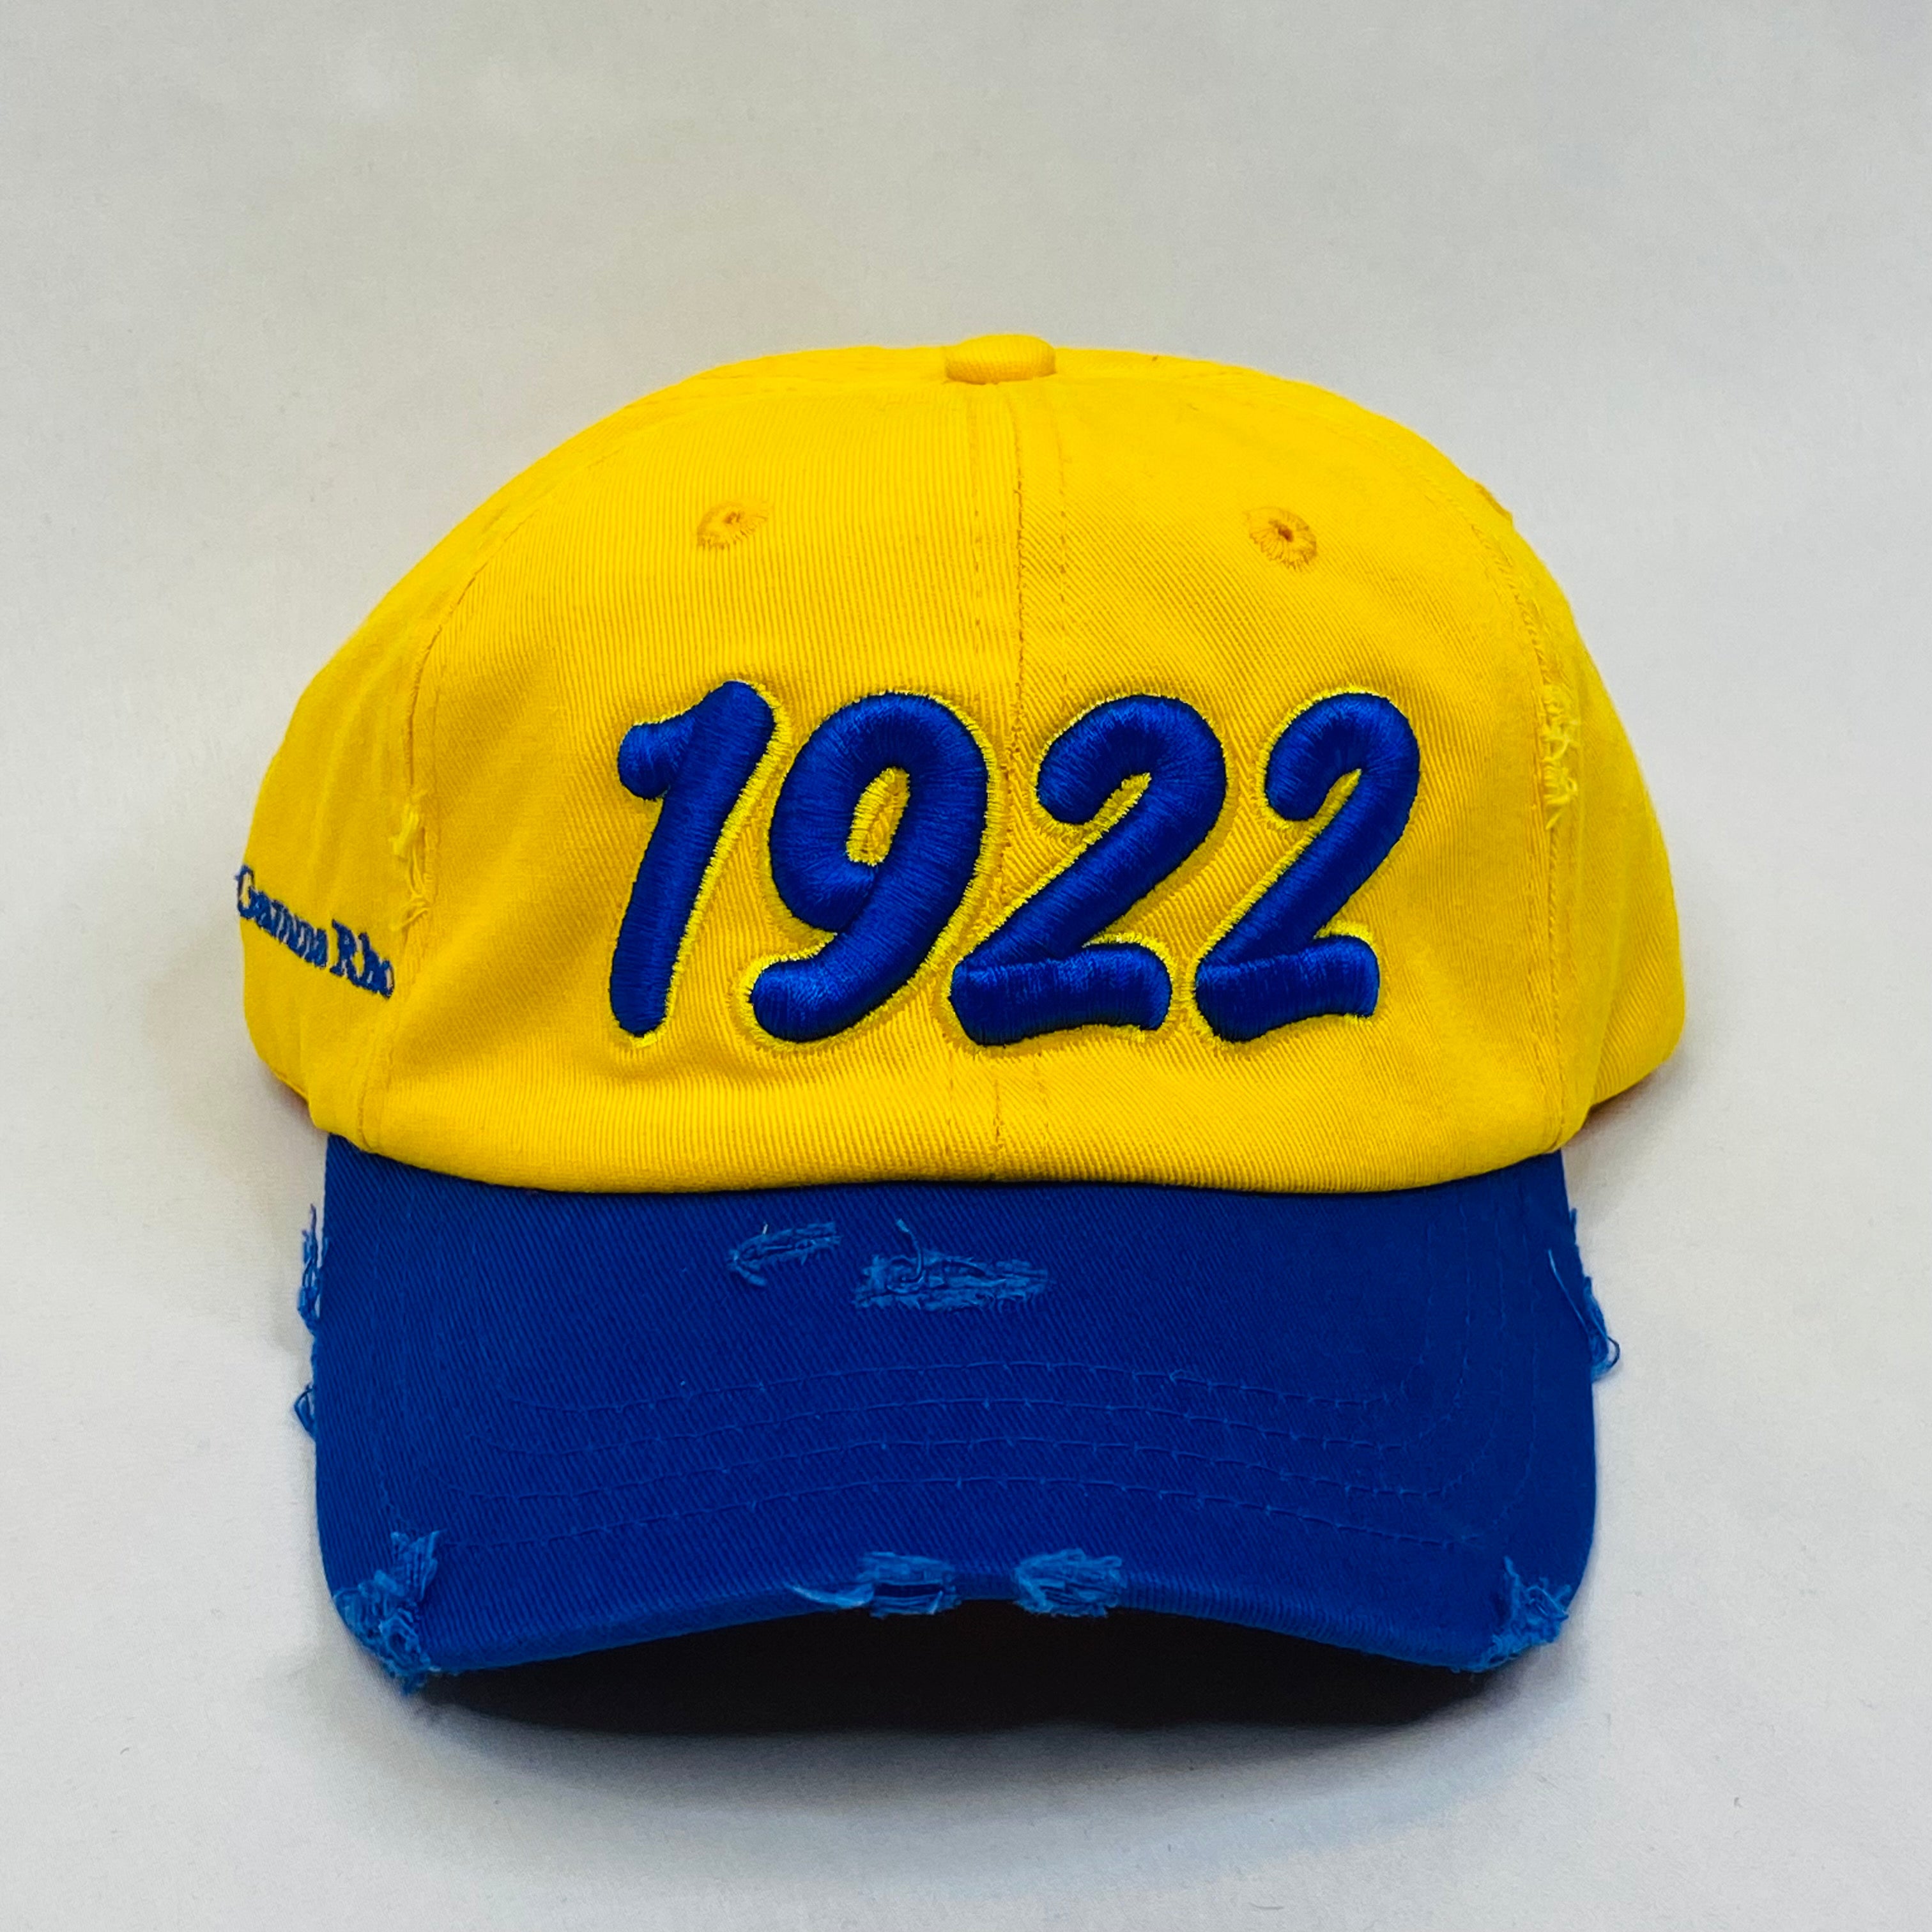 “1922” SGRho Yellow Gold & Royal Blue Hat